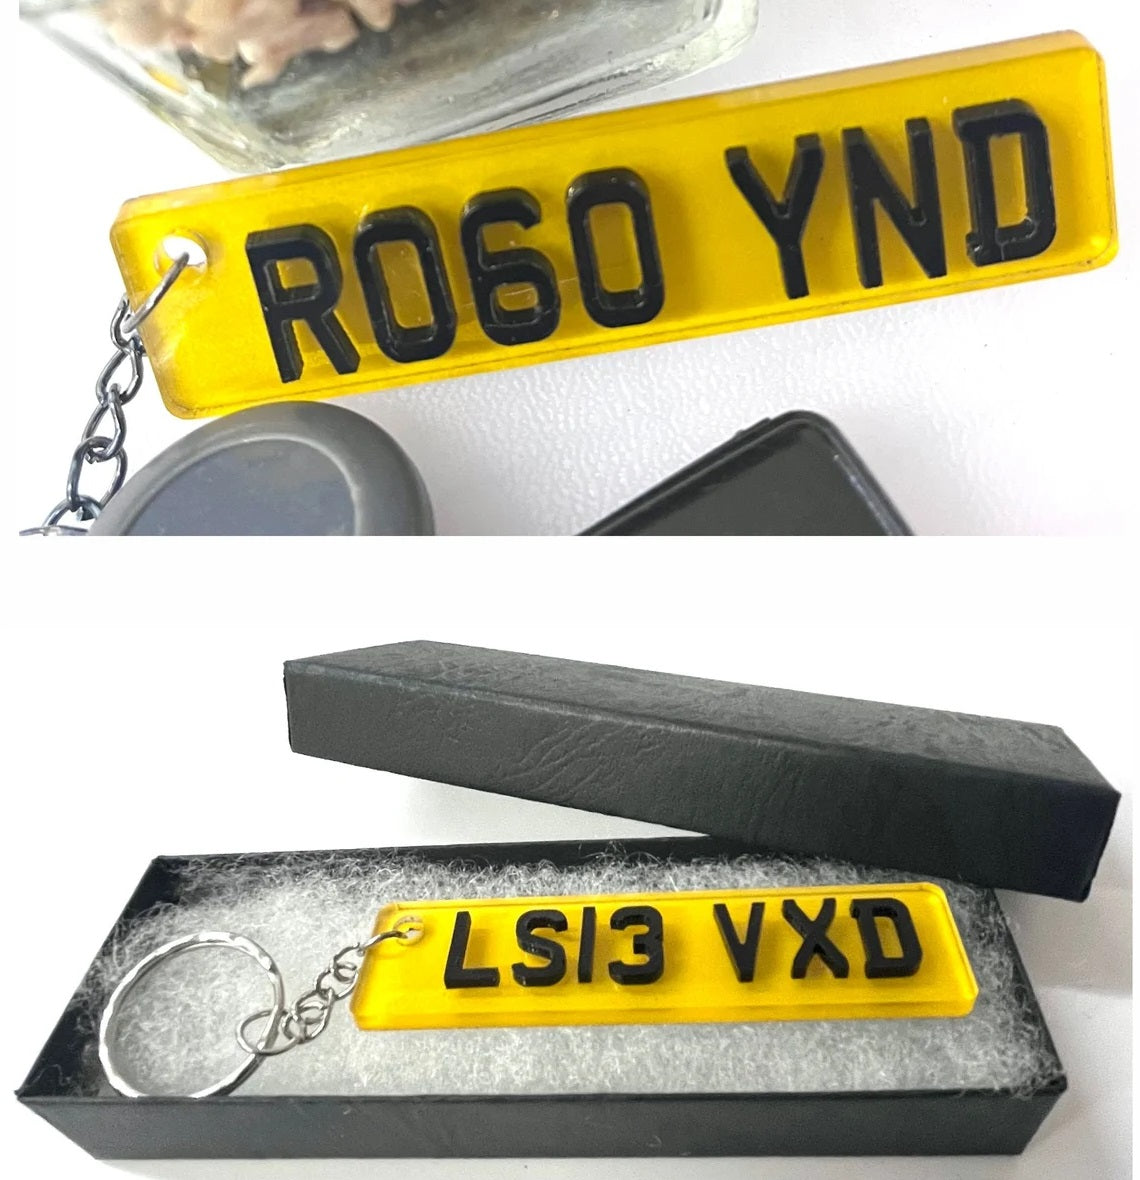 4D Number plate Keyring Custom Name & Car Registration Licence Plate Key Ring - Name Keychain, Gift Custom Number Palte